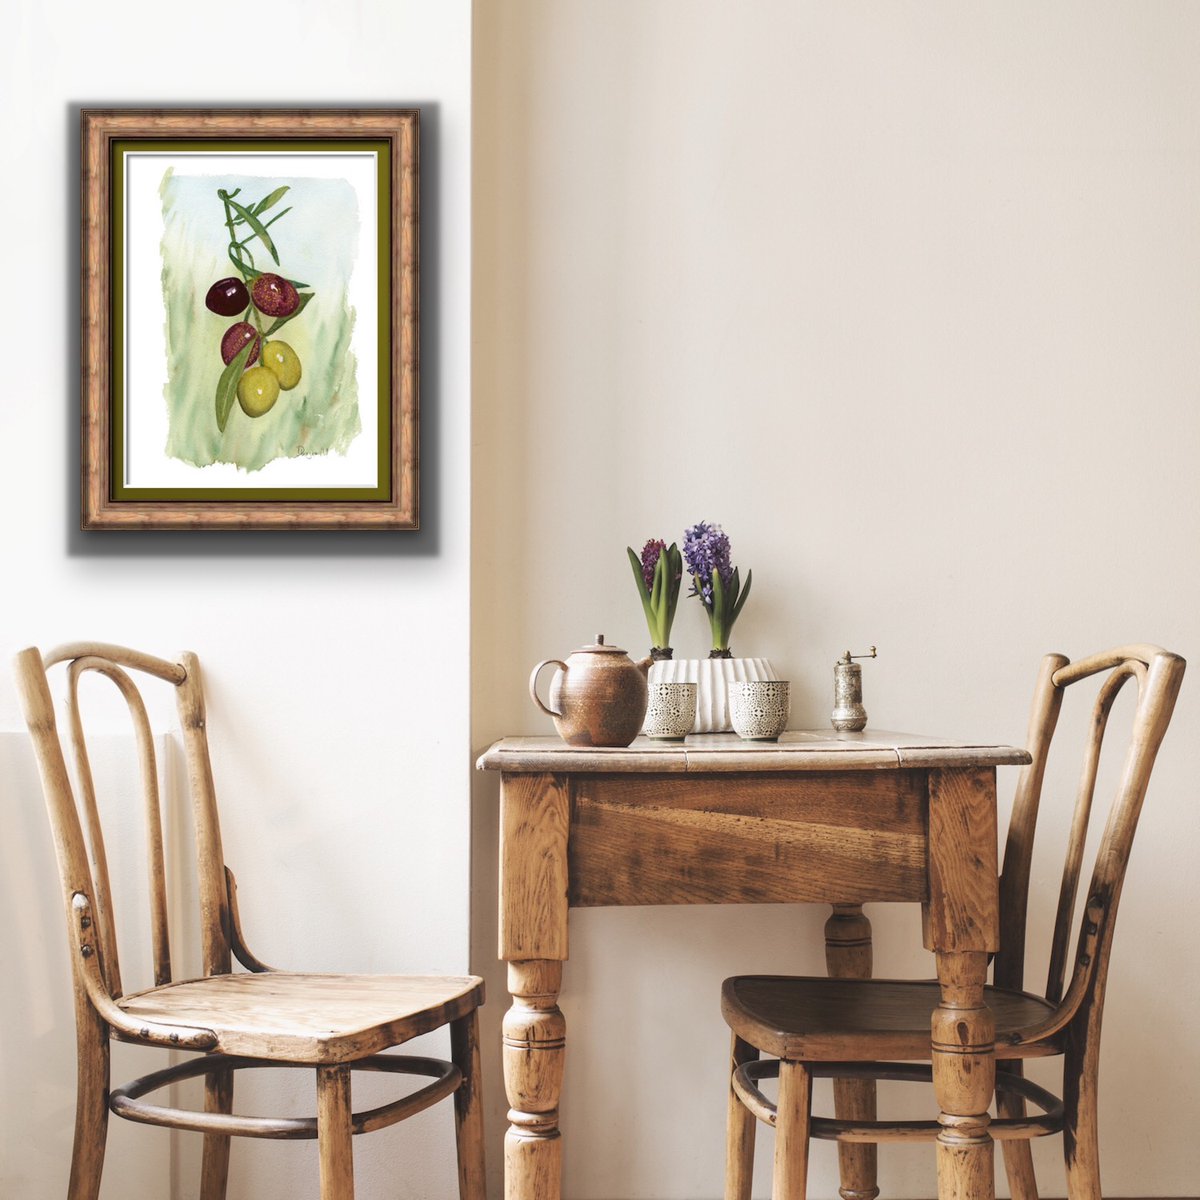 #watercolorfruit #oliveart #watercolorpainting #kitchendecor #bistroart #momwantsart

deborah-league.pixels.com/featured/medit…

#springforart #Giftthemart